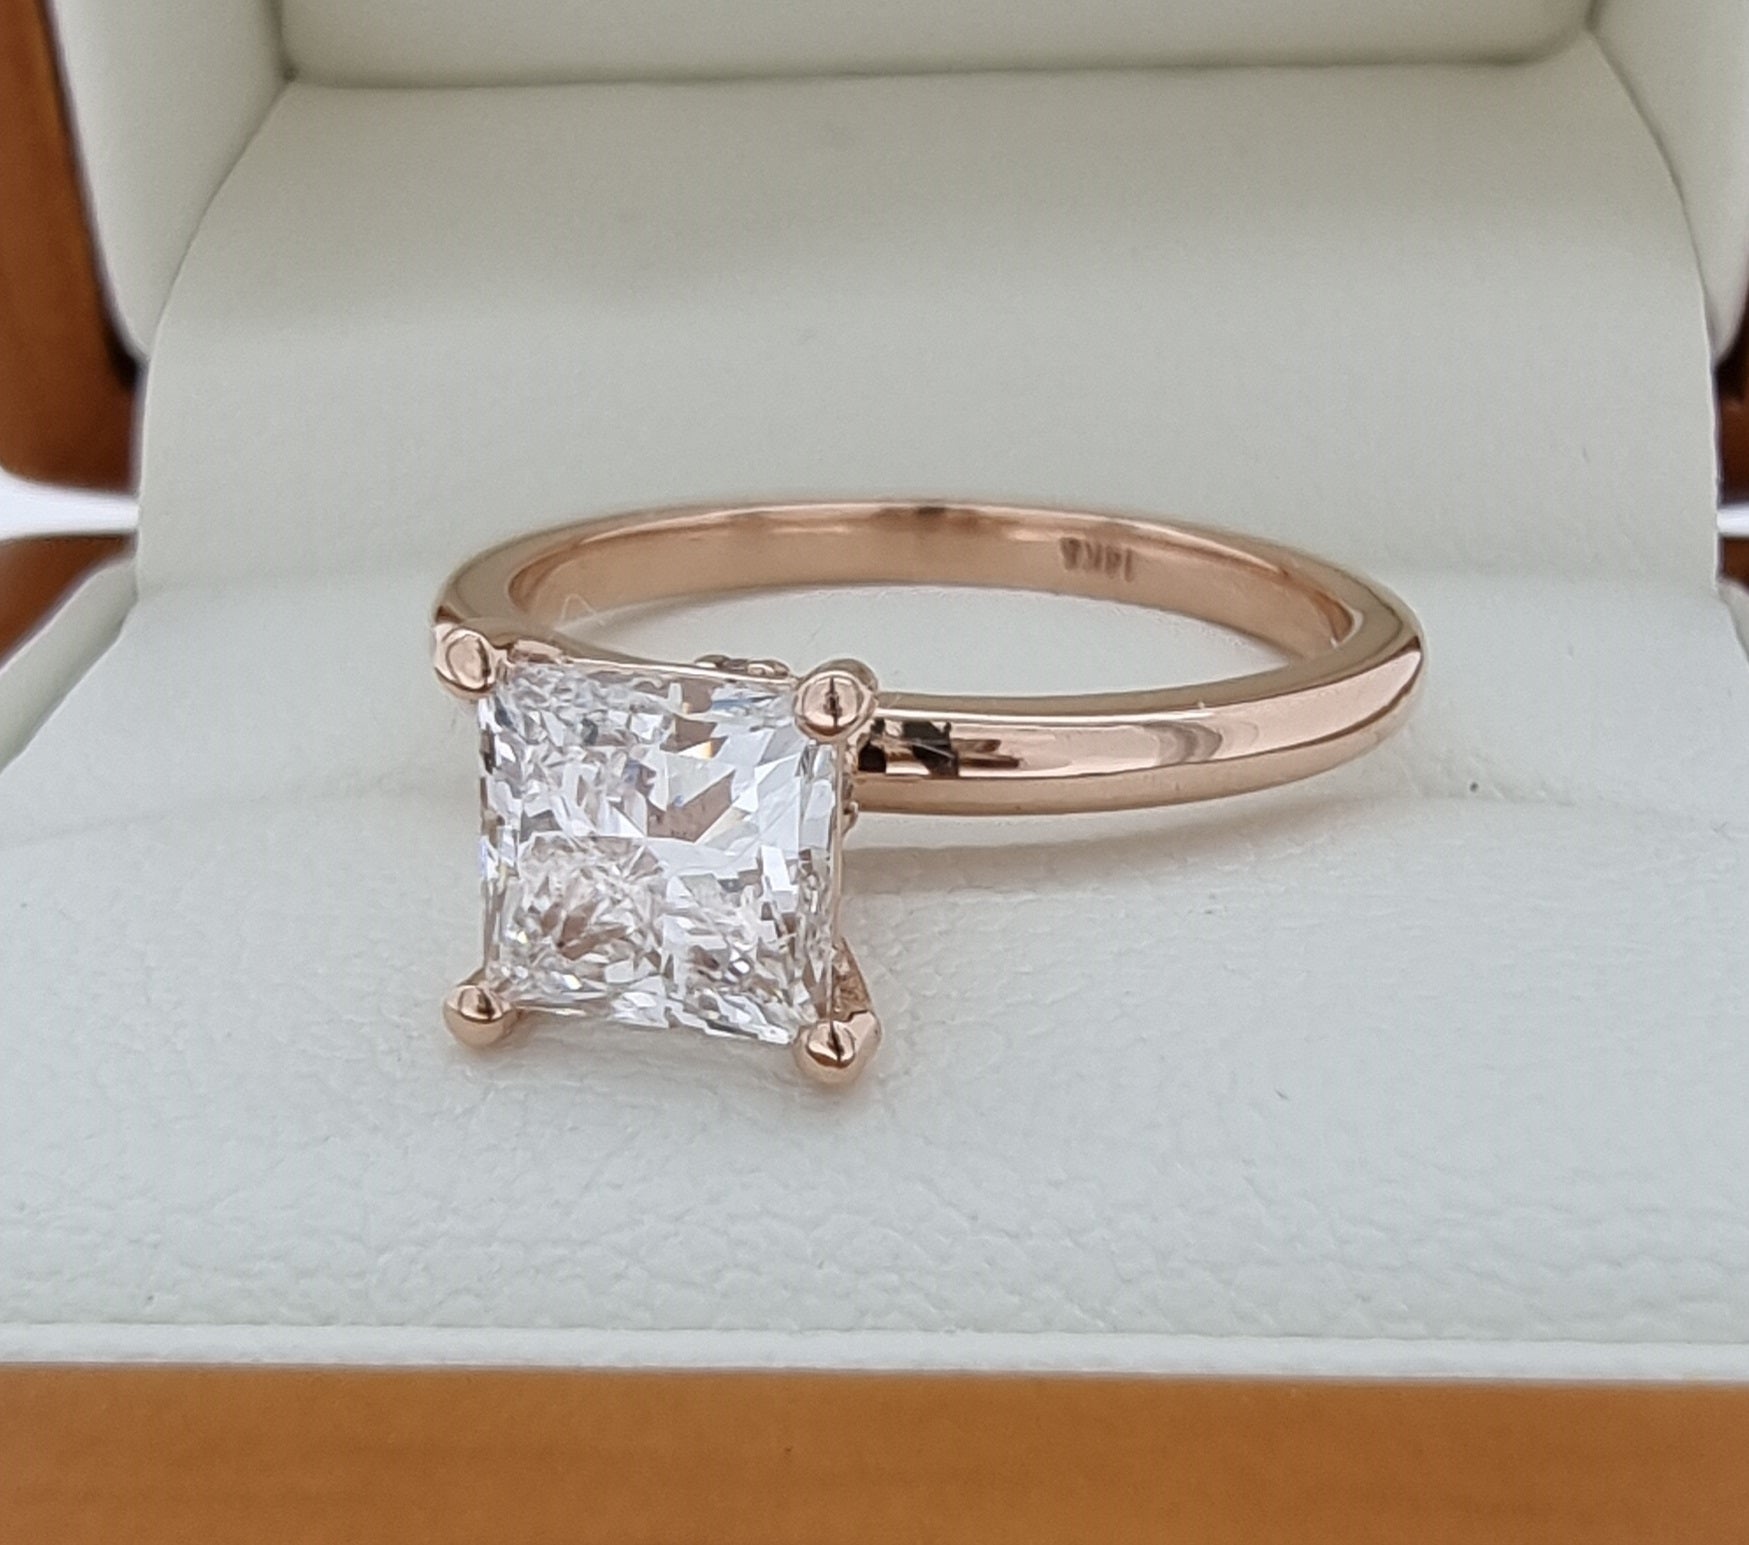 Breathtaking Princess Cut LG Diamond in Rose Gold